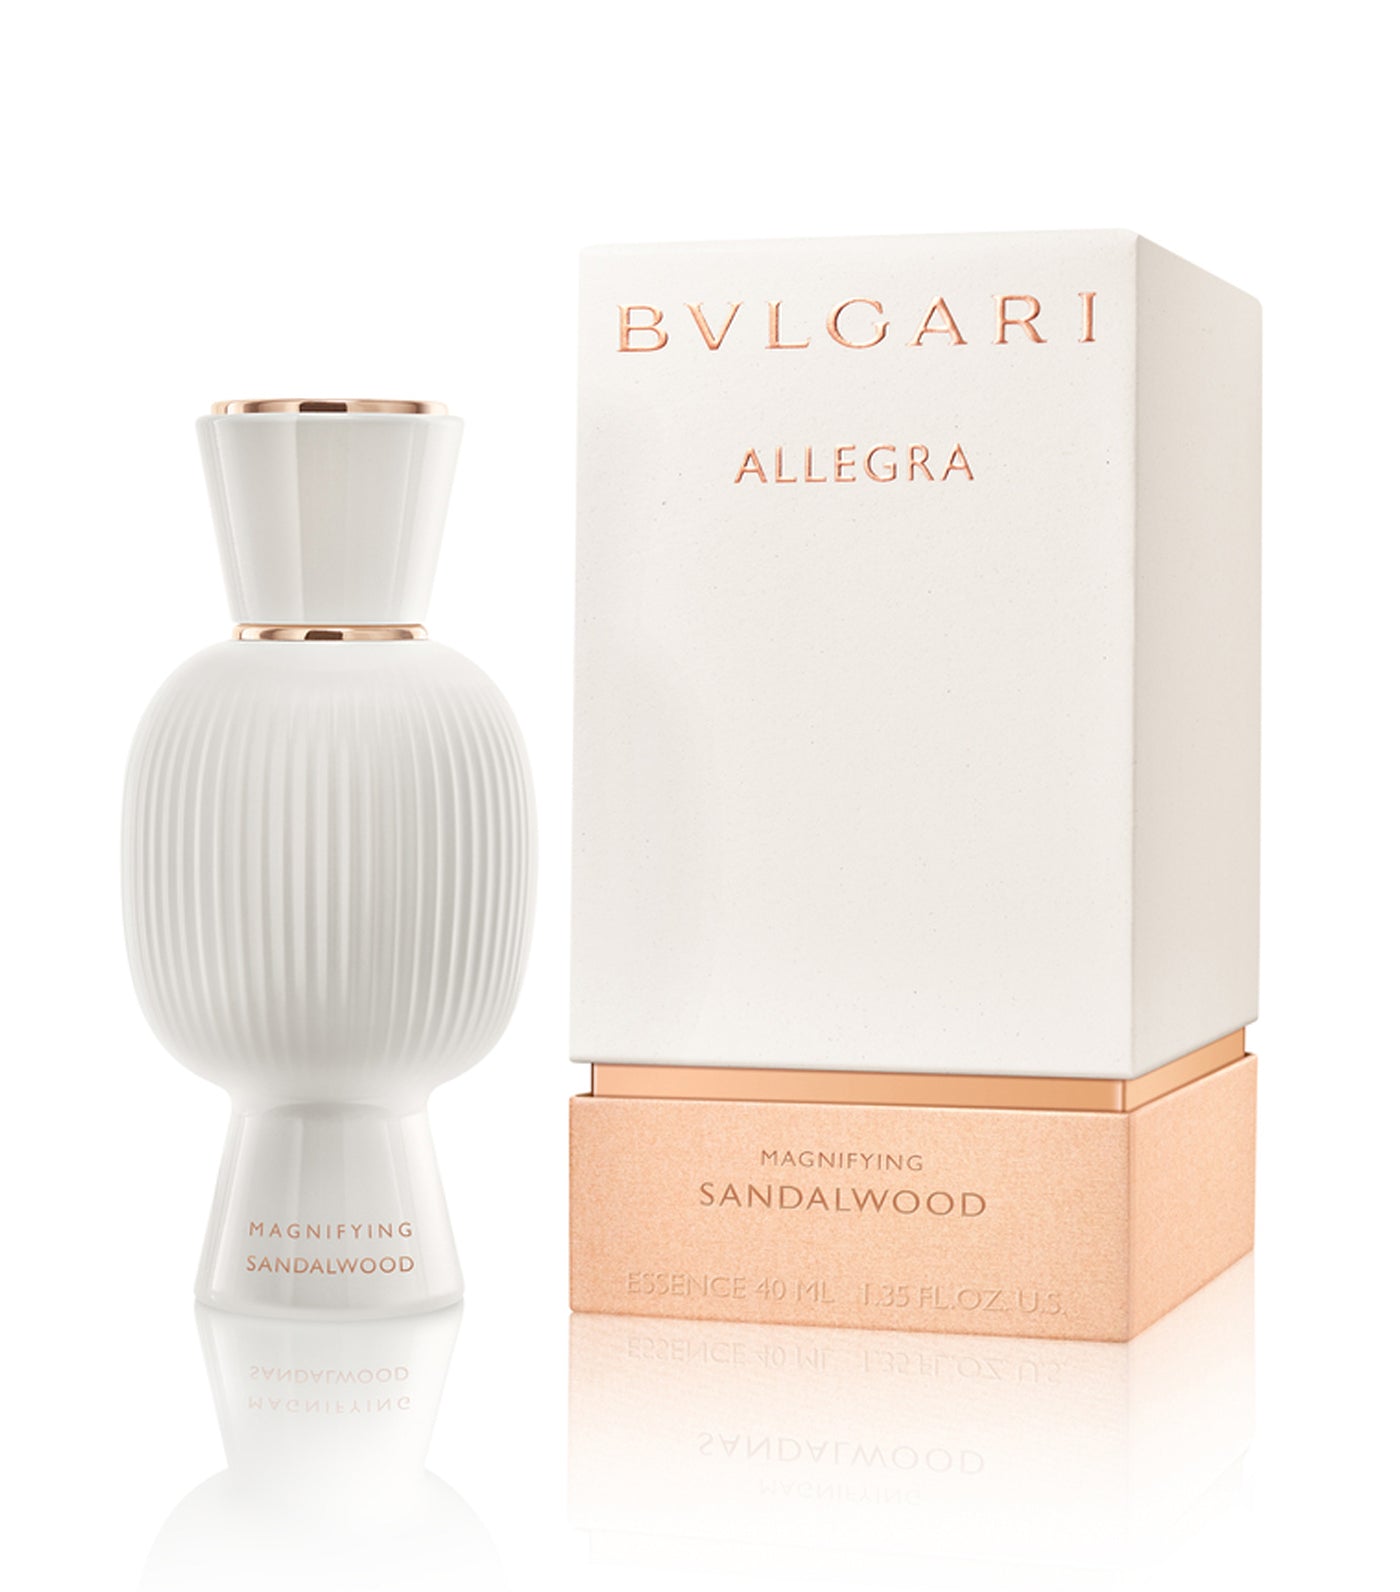 BVLGARI ALLEGRA Magnifying Sandalwood Eau de Parfum